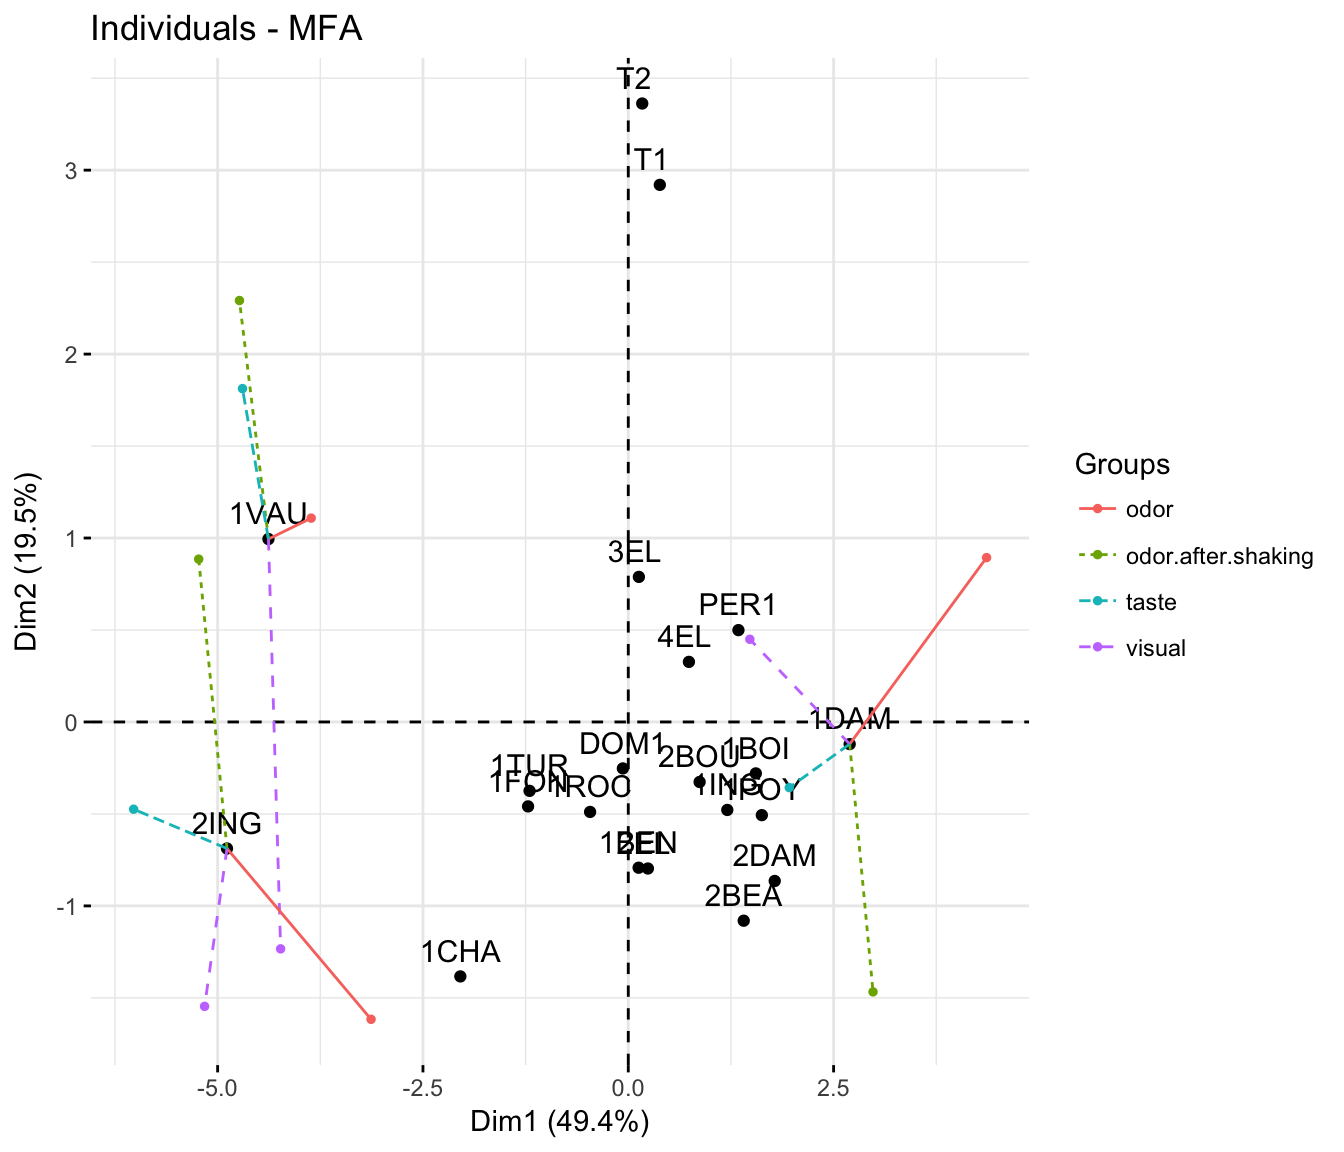 MFA - Multiple Factor Analysis in R: Essentials